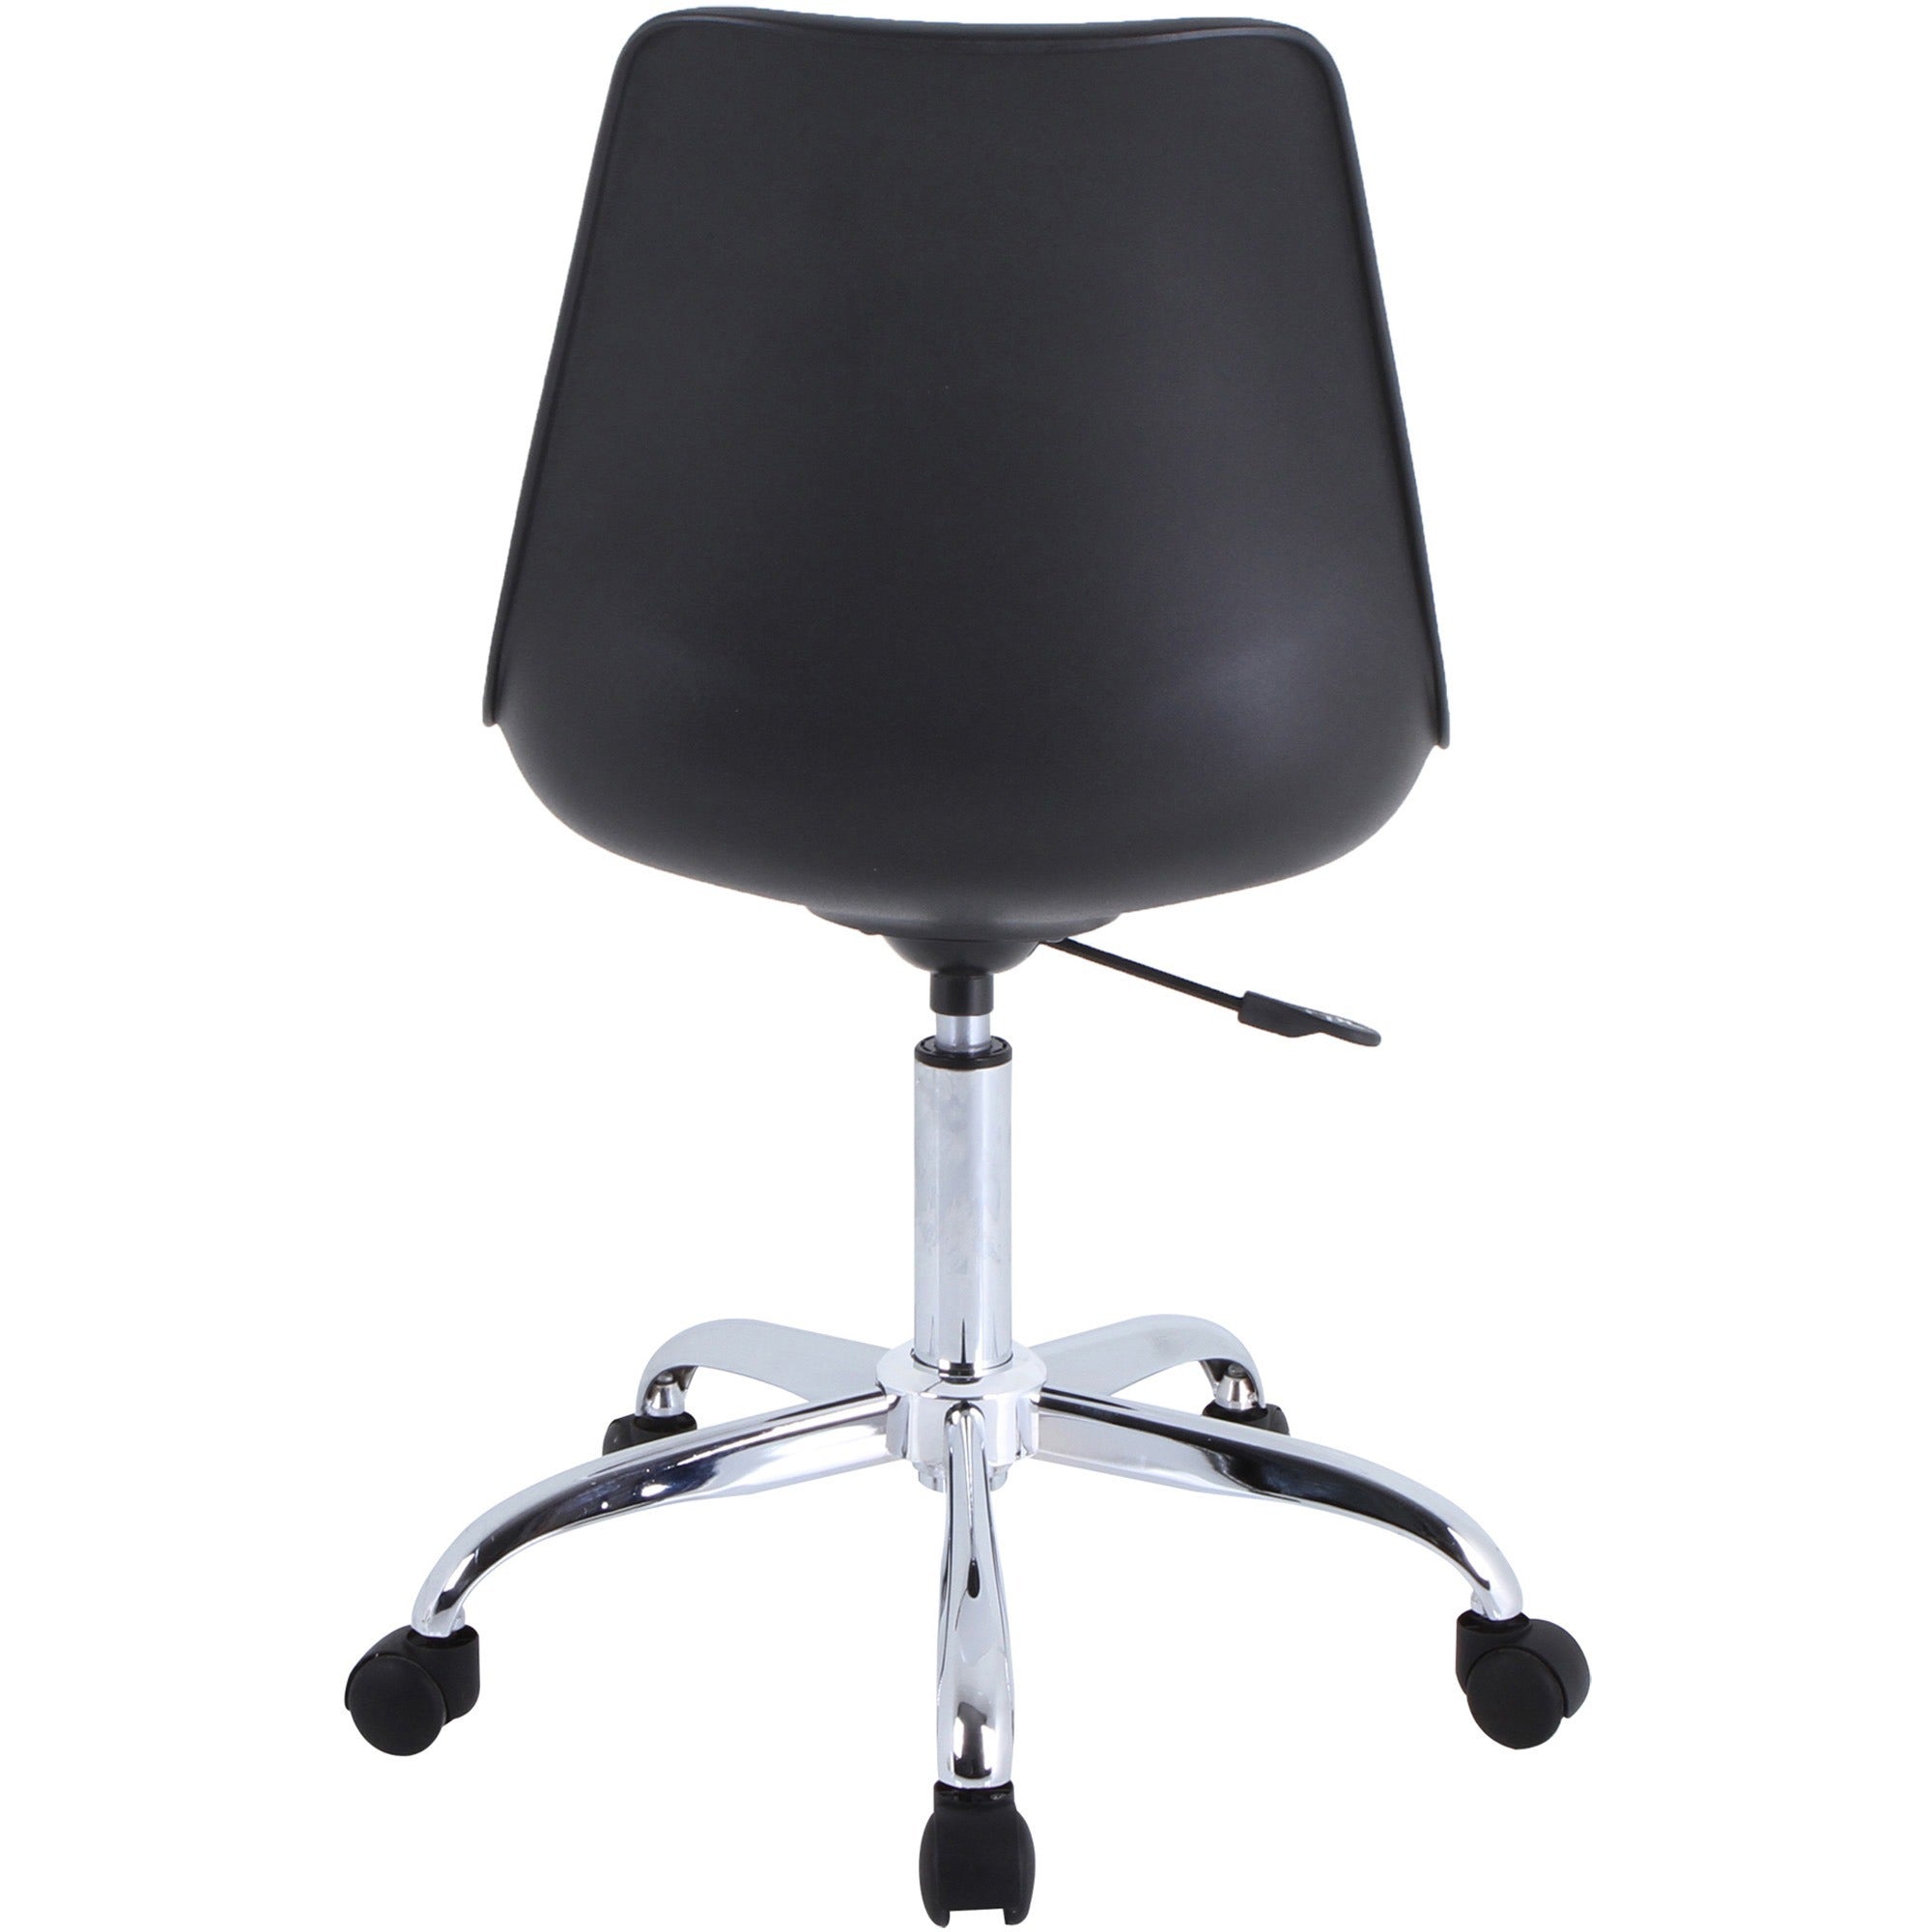 nusparc-padded-seat-poly-task-chair-poly-seat-high-back-5-star-base-black-polyvinyl-chloride-pvc-plastic-polyurethane-1-each_nprch303cnbk - 5